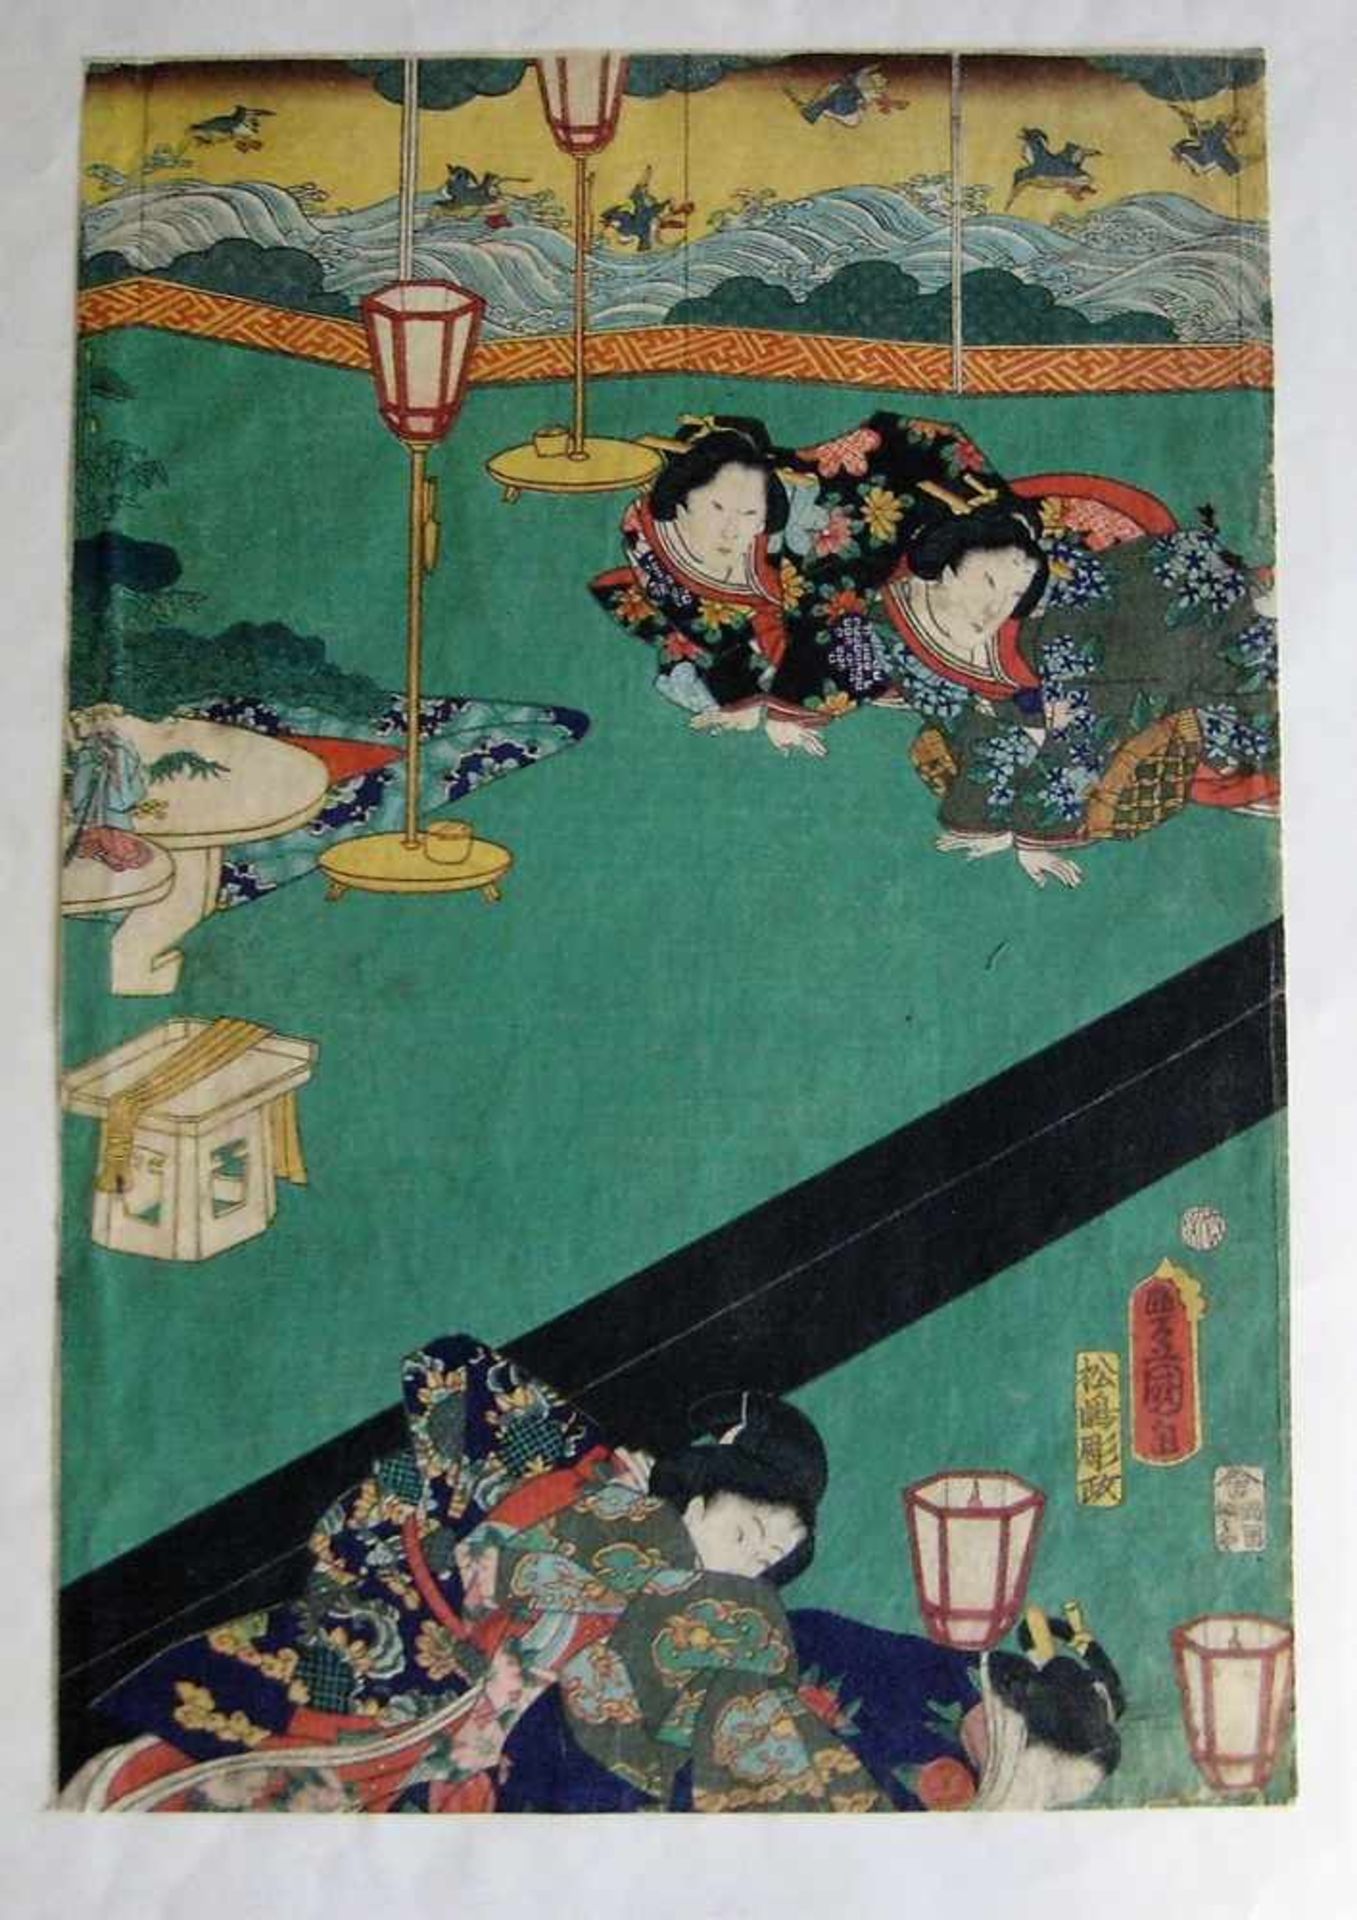 3 Farbholzschnitte, Japan, 19. Jahrhundert, Tryptichon, "Personen am Hof", sign., 35,5 x 24,5 cm, - Image 3 of 4